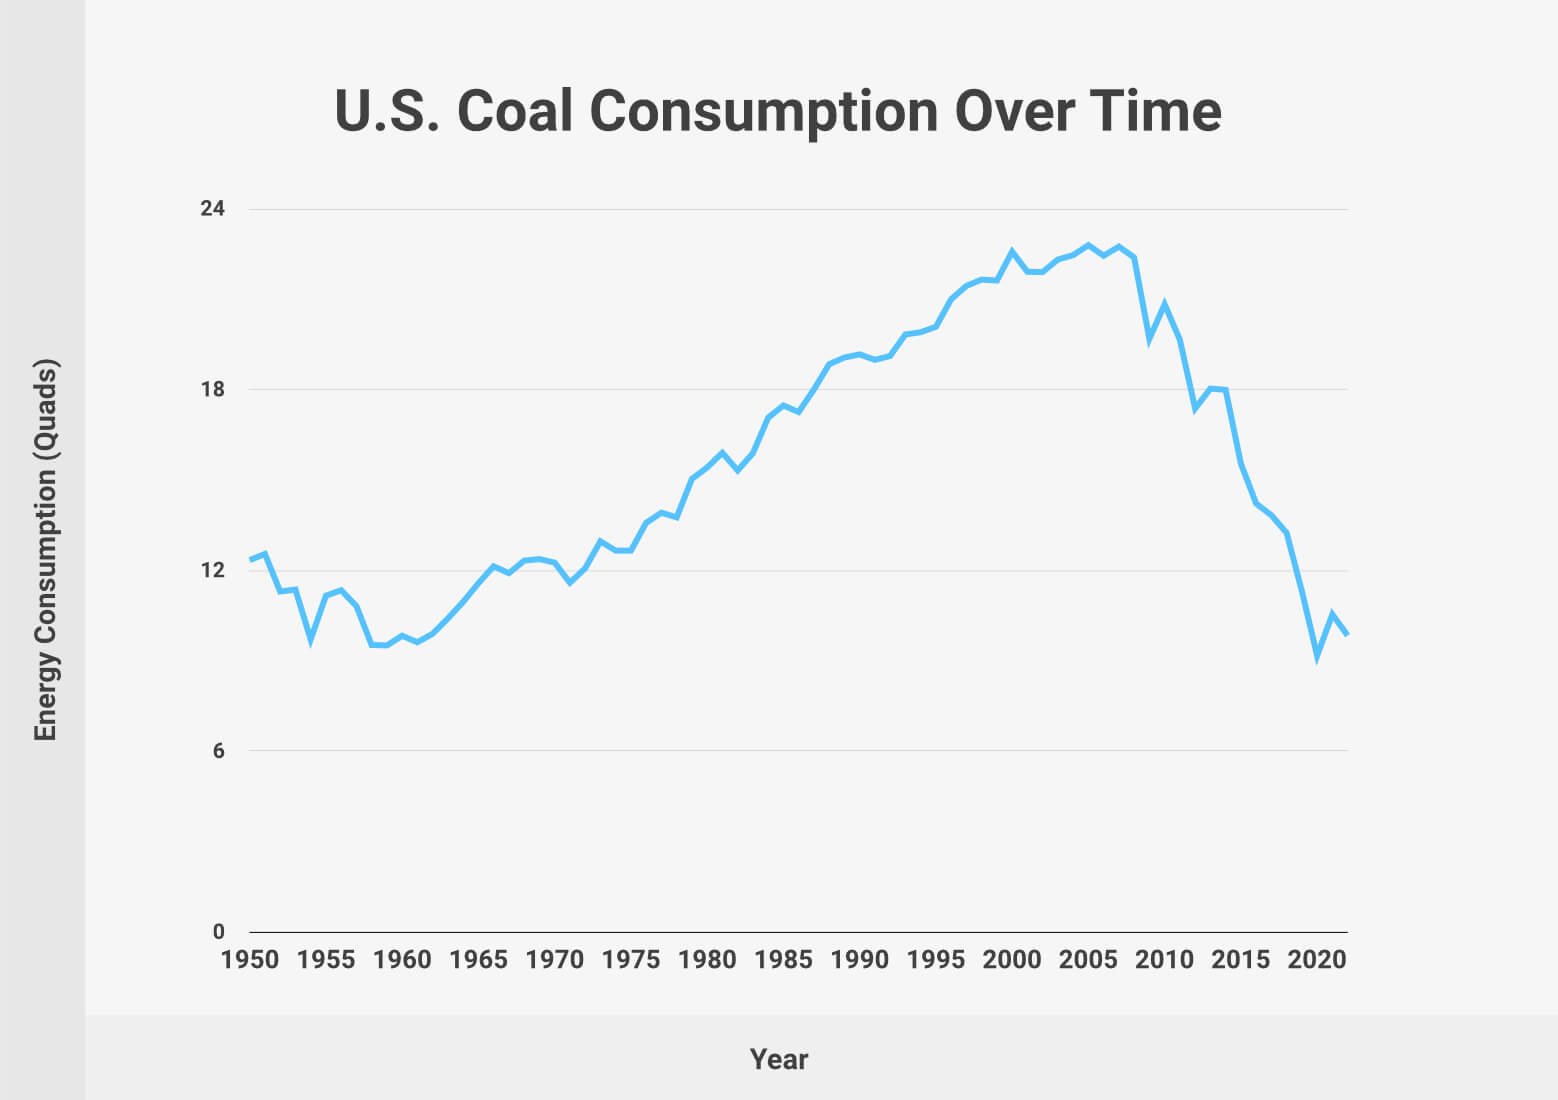 U.S. Coal Consumption Over Time